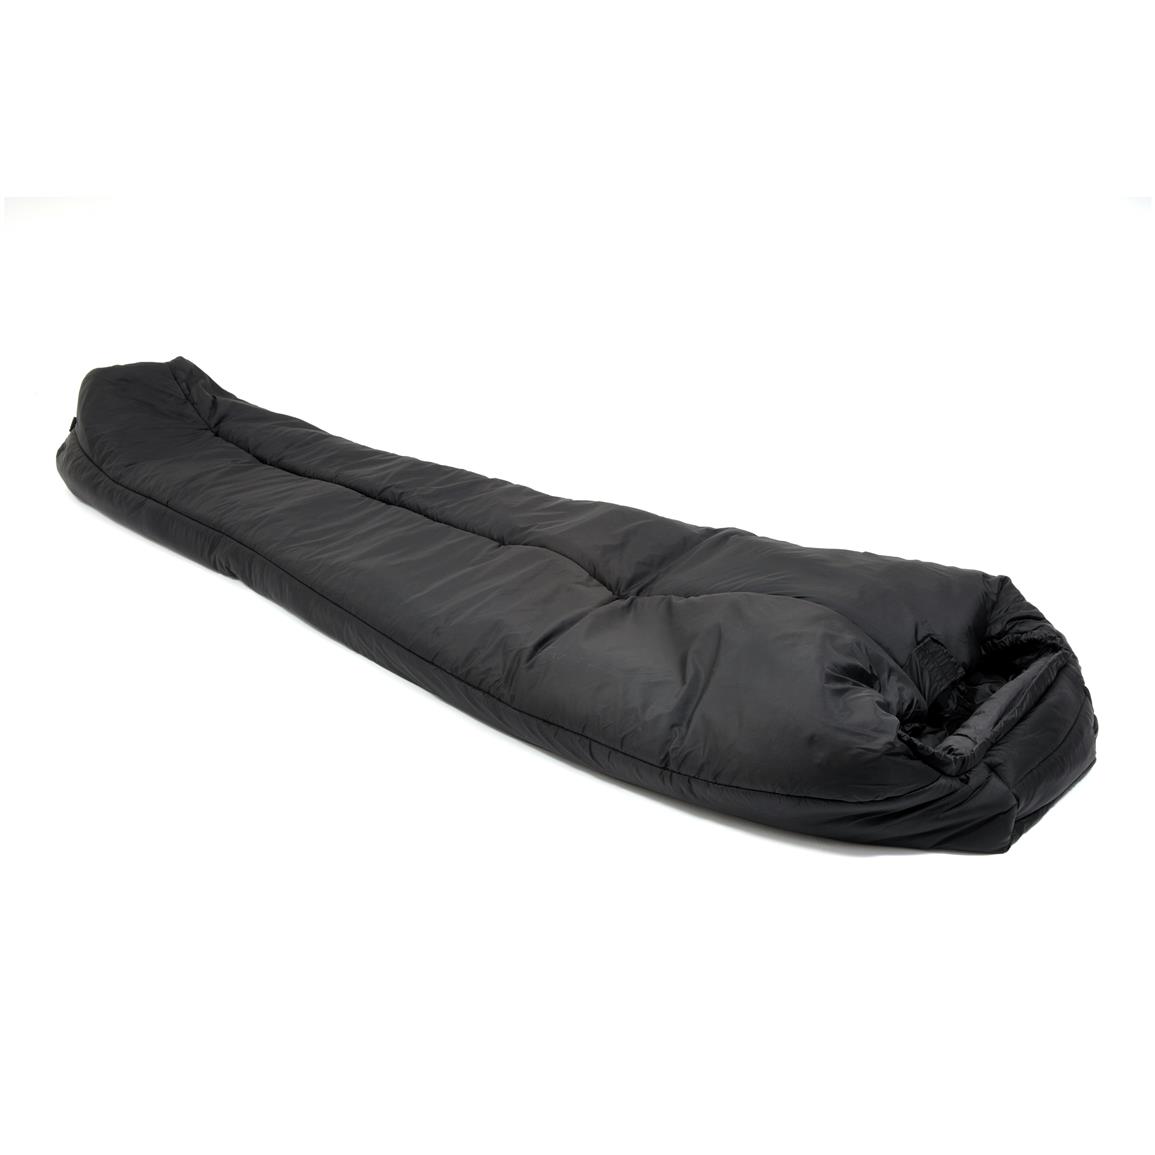 Snugpak Softie 18 Antarctica RE Center-Zip Sleeping Bag - 128471, Mummy